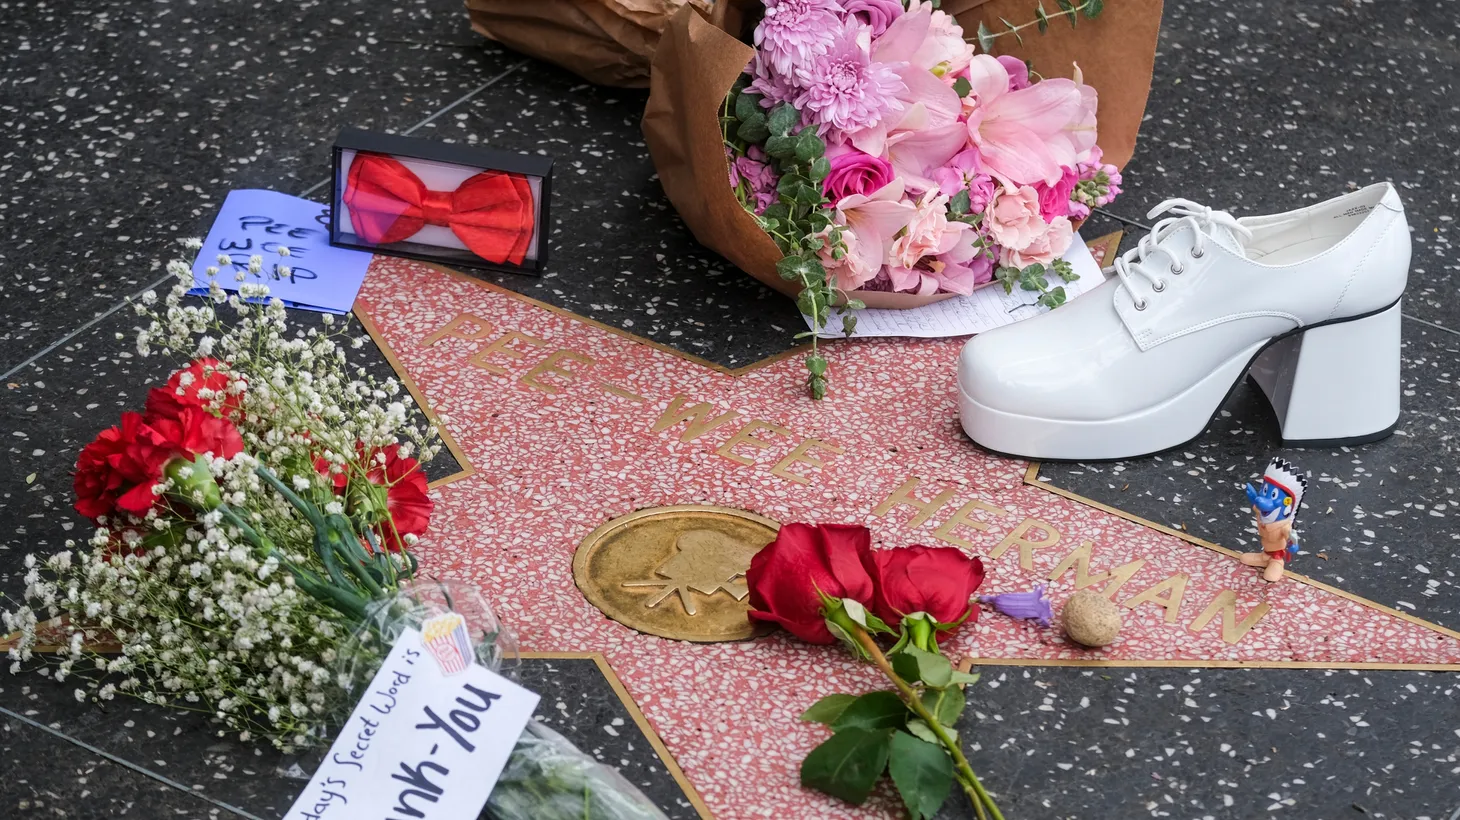 Fans left remembrances for Paul Reubens on his Hollywood Walk of Fame star, even a signature platform shoe.